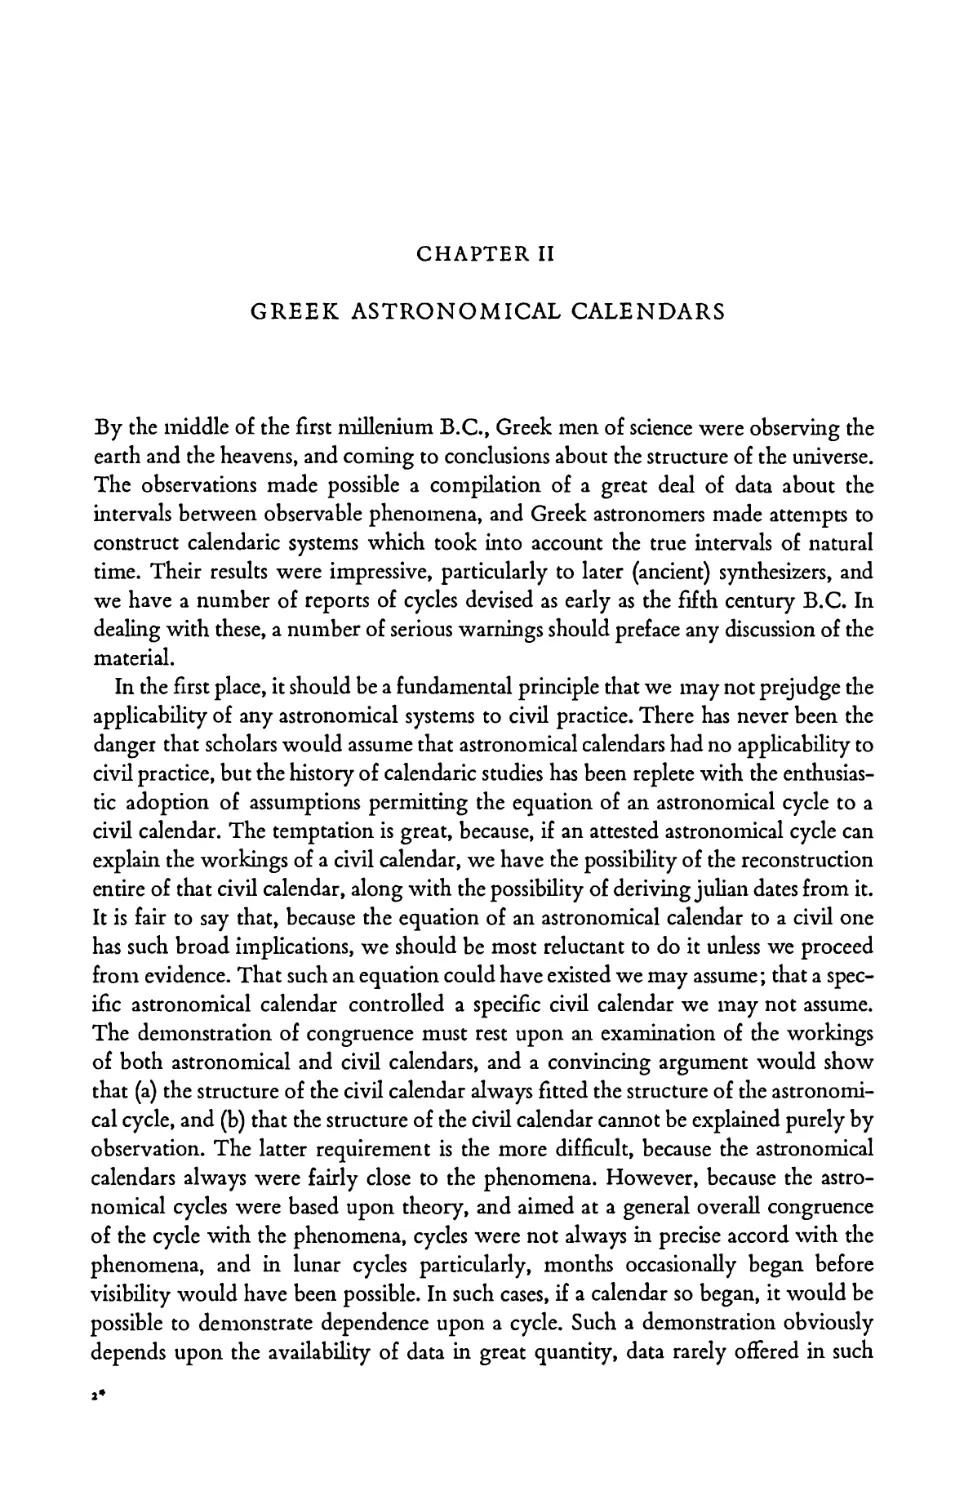 CHAPTER II. GREEK ASTRONOMICAL CALENDARS